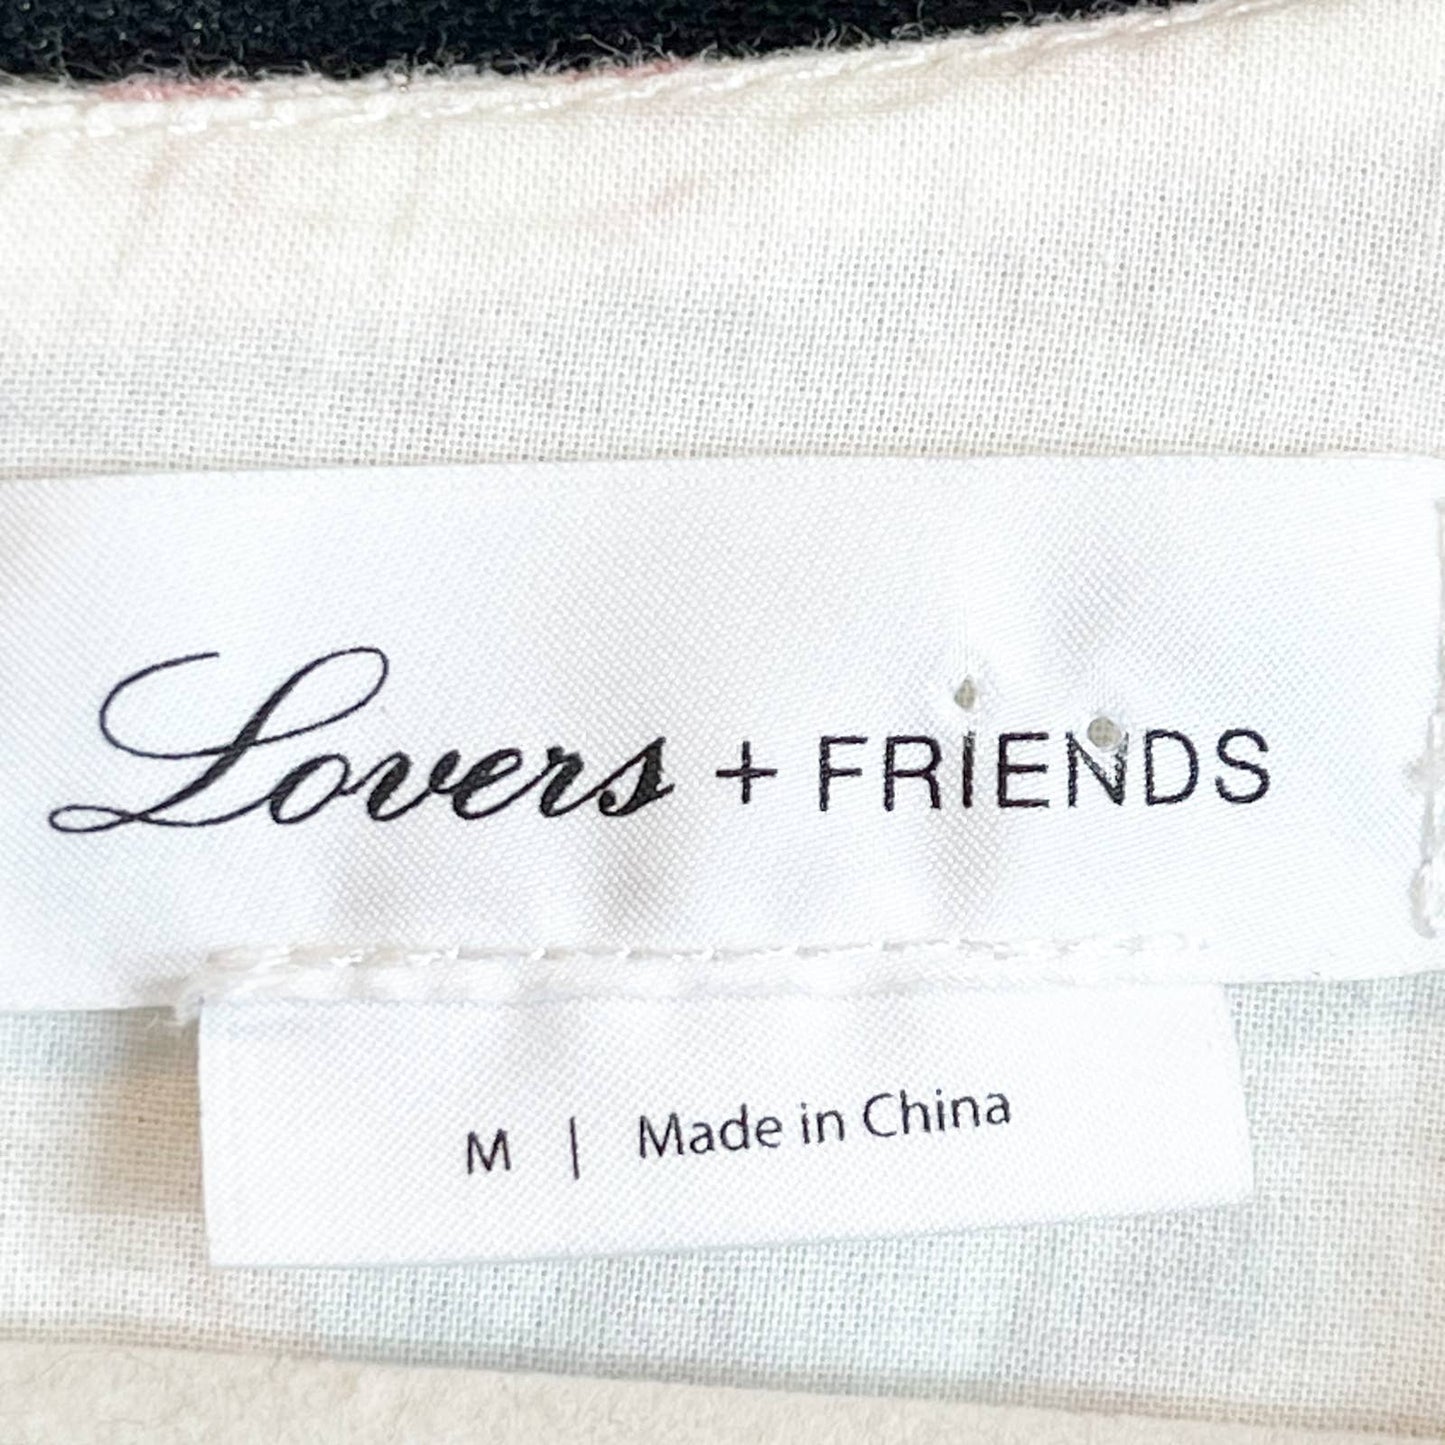 Lovers + Friends Hazen Striped Plunging V-Neck Belted Mini Dress Pink / White M